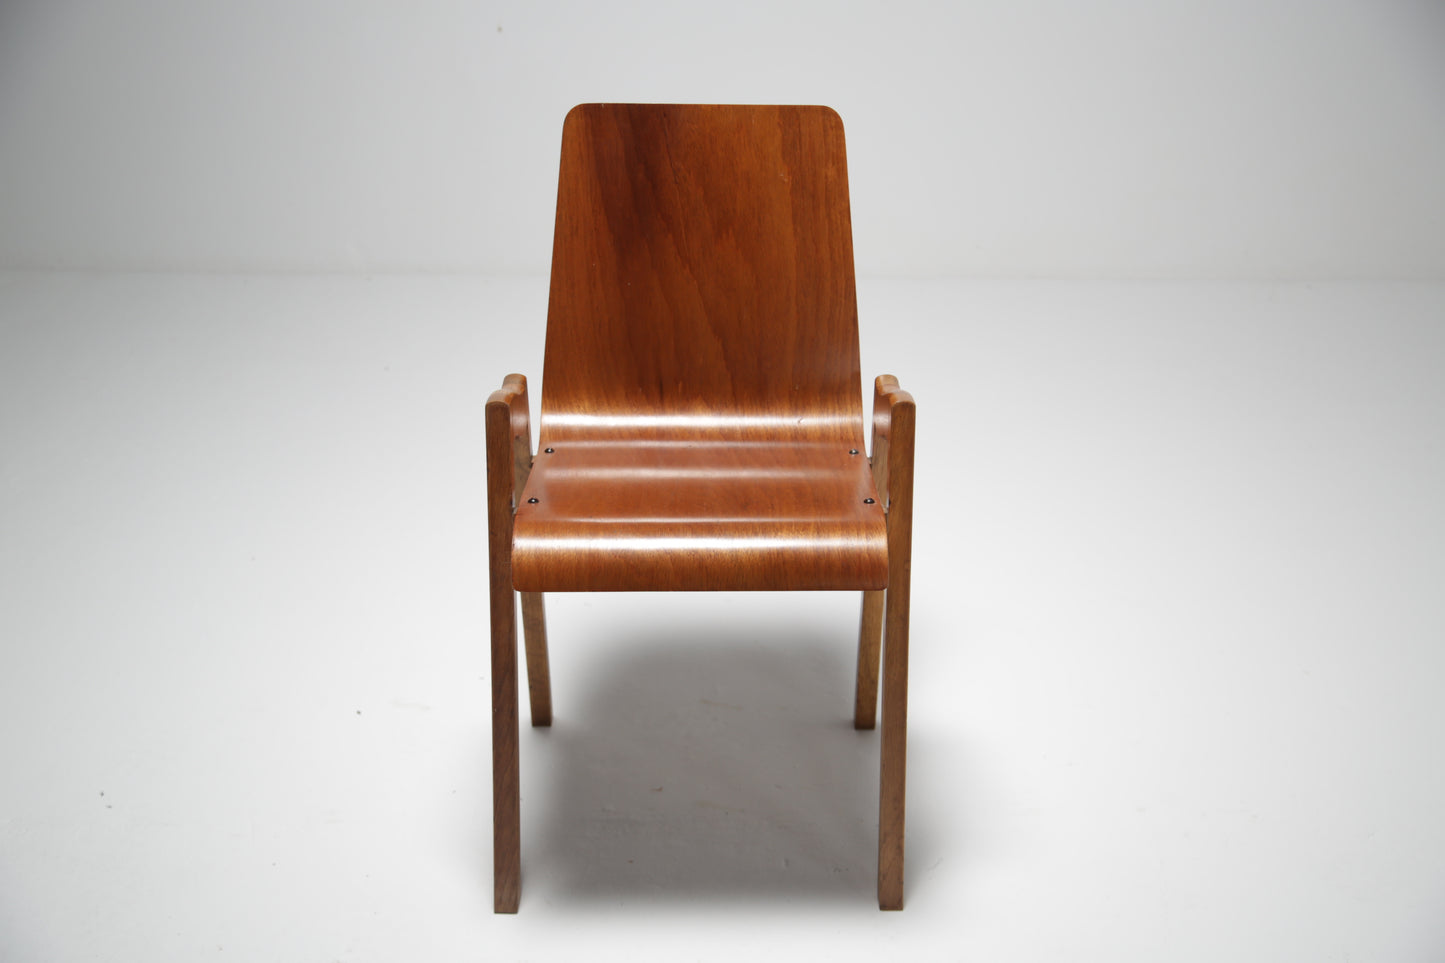 Bent Ply mid-century chair